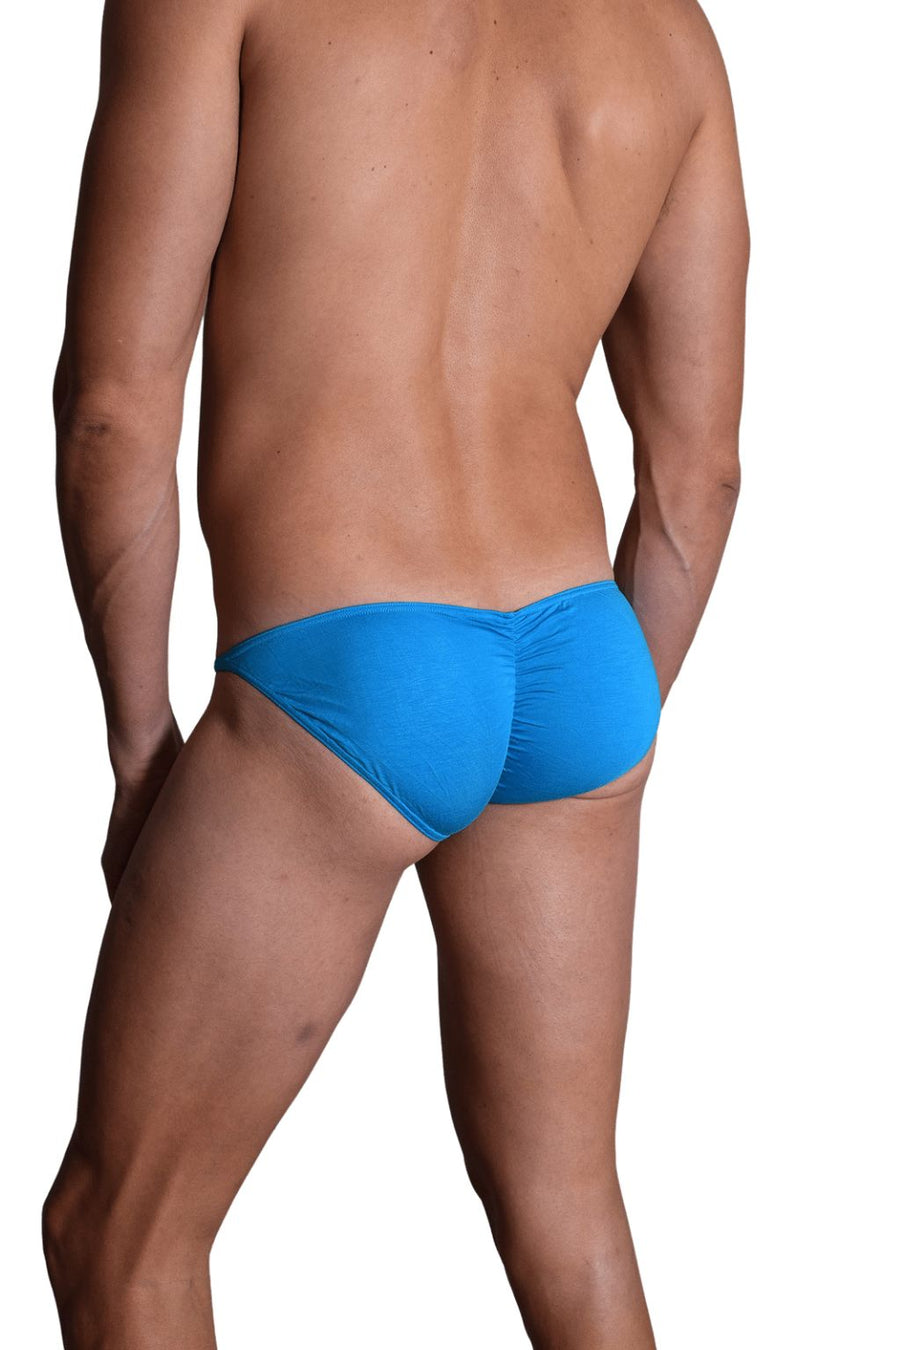 BfM Mens Micro Sheer Thong Pouch Underwear – Bodywear for Men